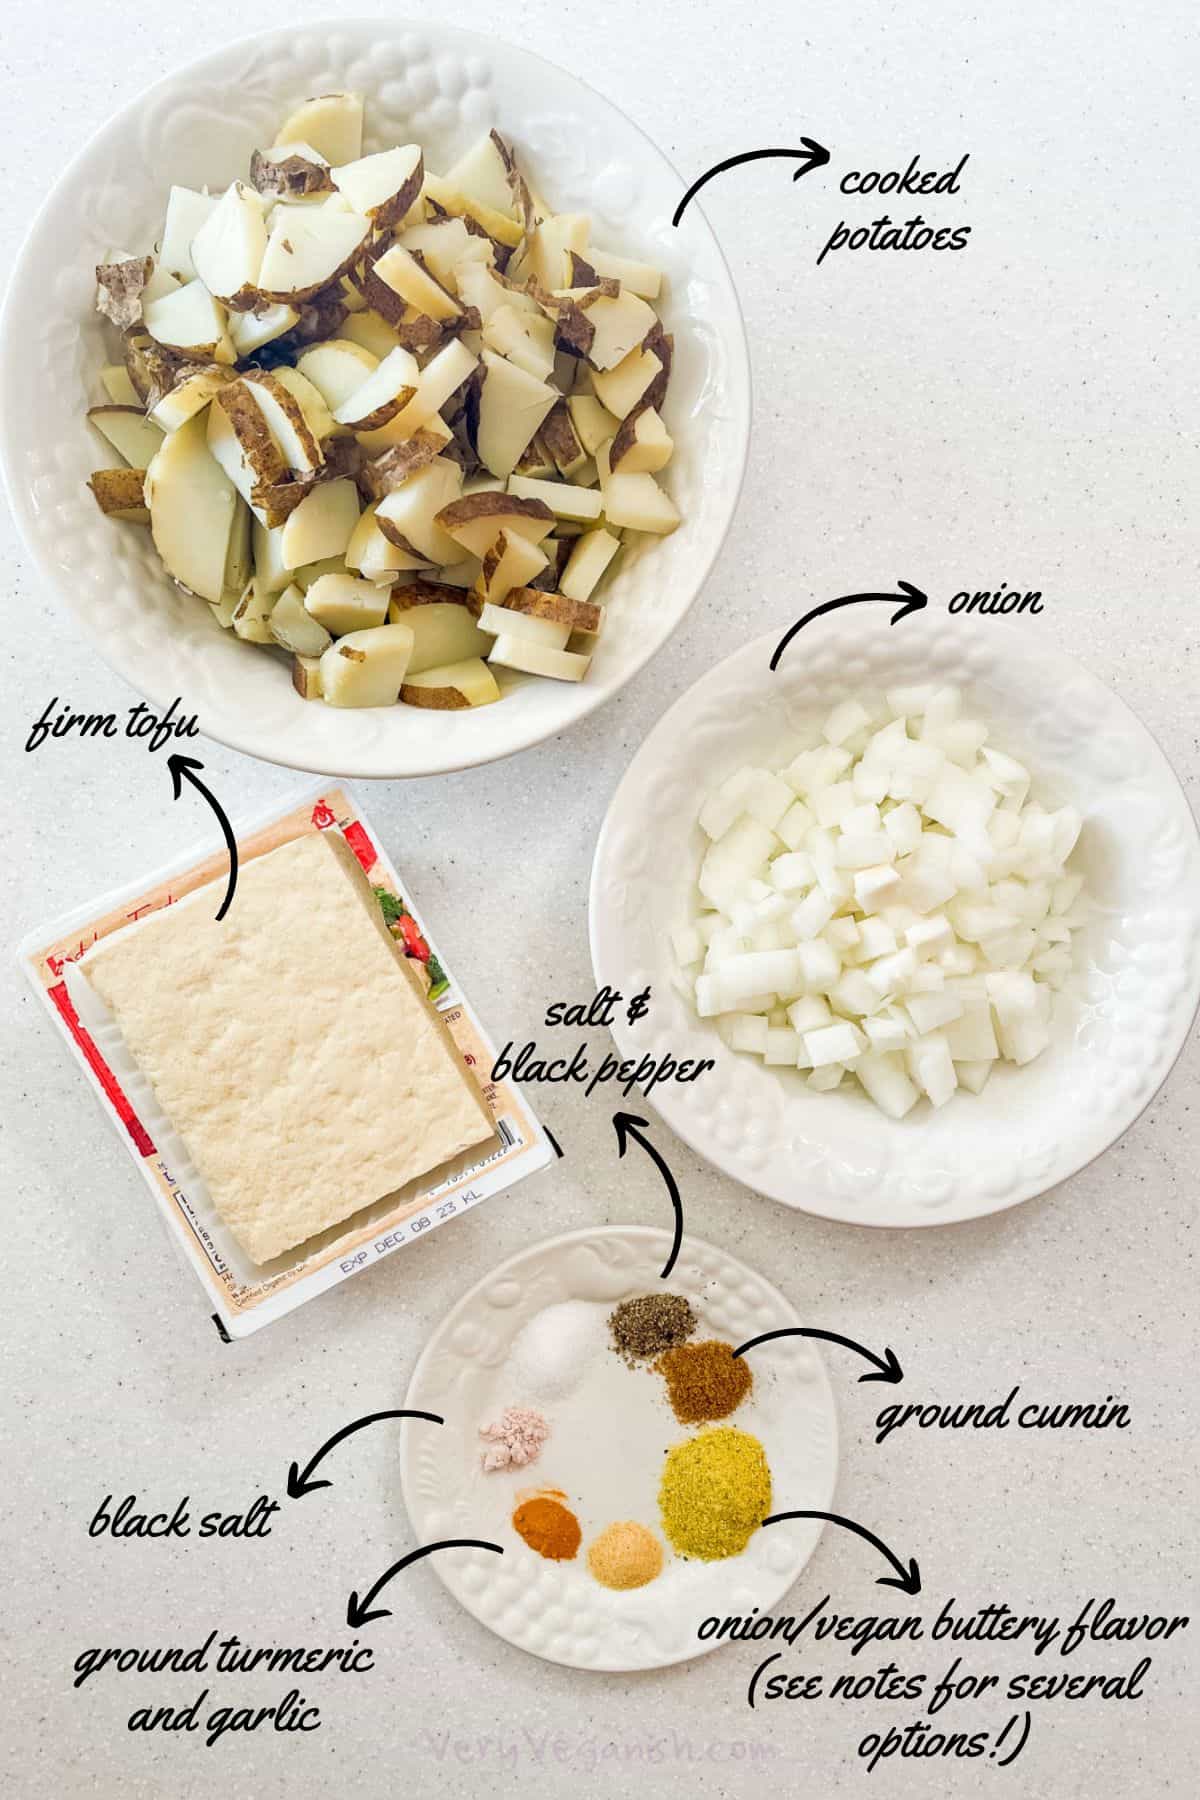 Ingredients for Potato and Egg Vegan Breakfast Tacos: steamed russet potatoes, onion, firm tofu and seasonings: salt, black pepper, ground cumin, black salt, turmeric, garlic and vegan onion/buttery flavor